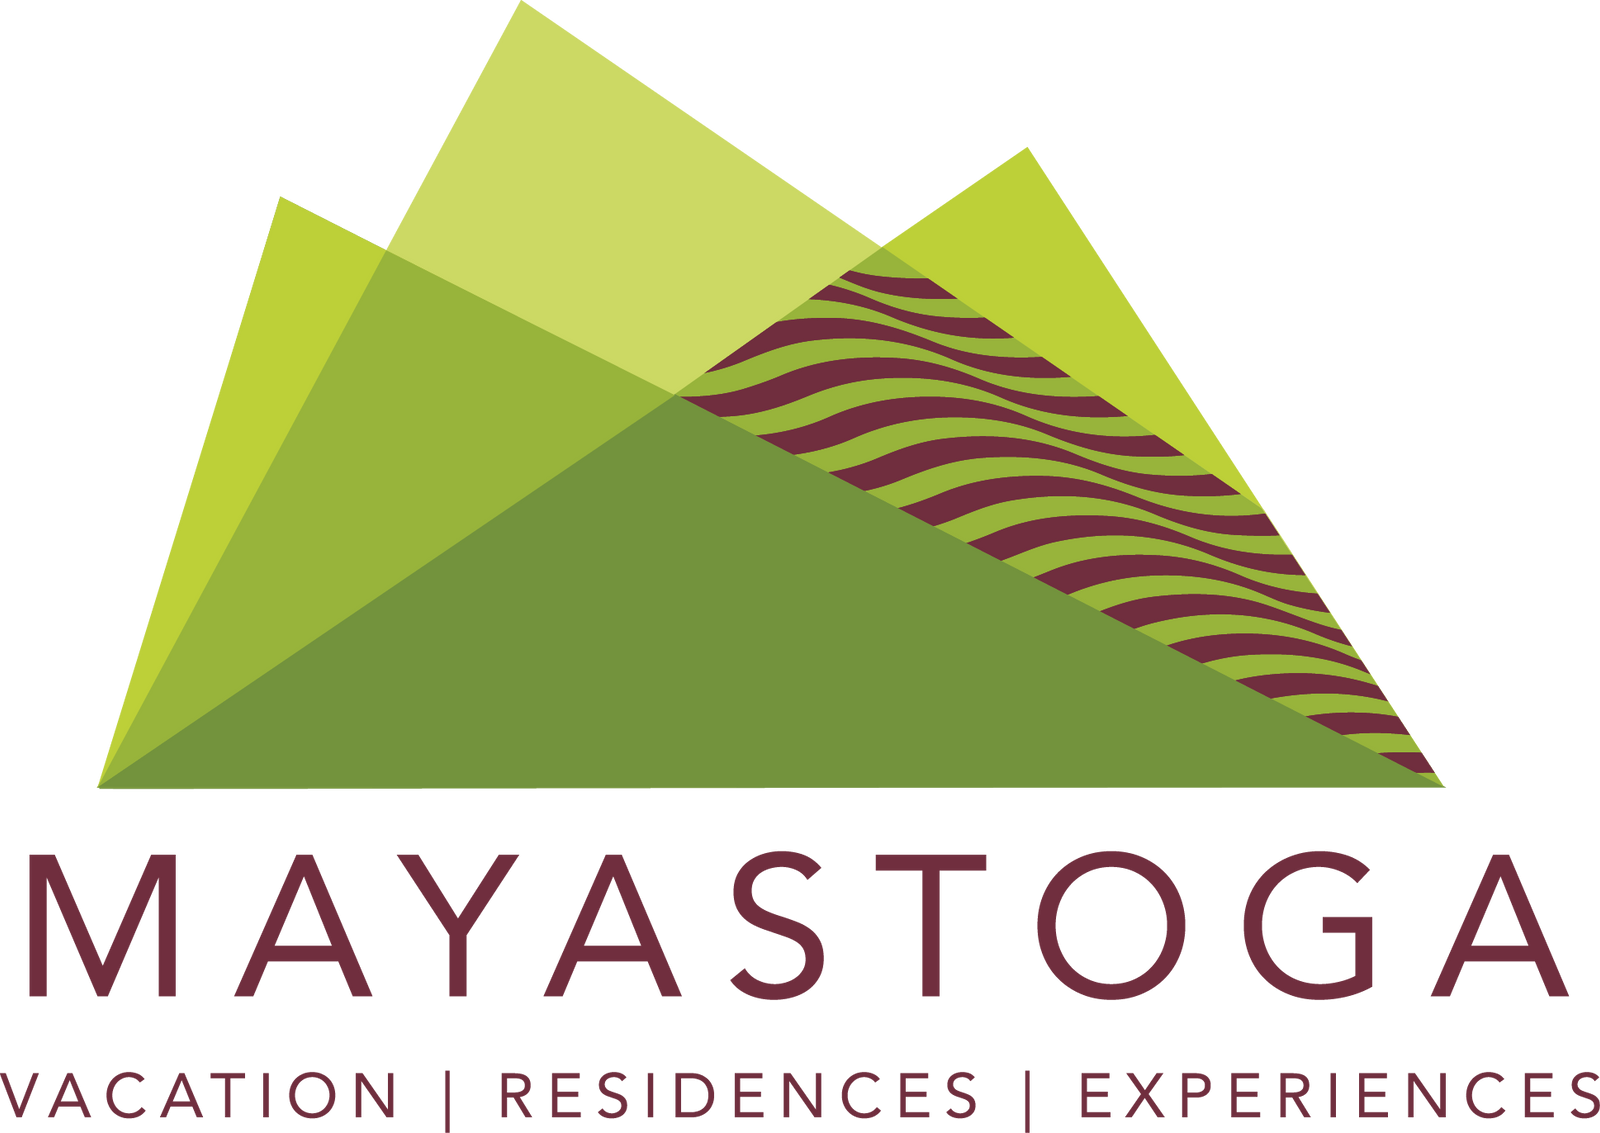 Mayastoga Luxury Vacation Rentals logo: A sophisticated and elegant logo representing Mayastoga Luxury Vacation Rentals, a premier vacation rental company in Napa Valley